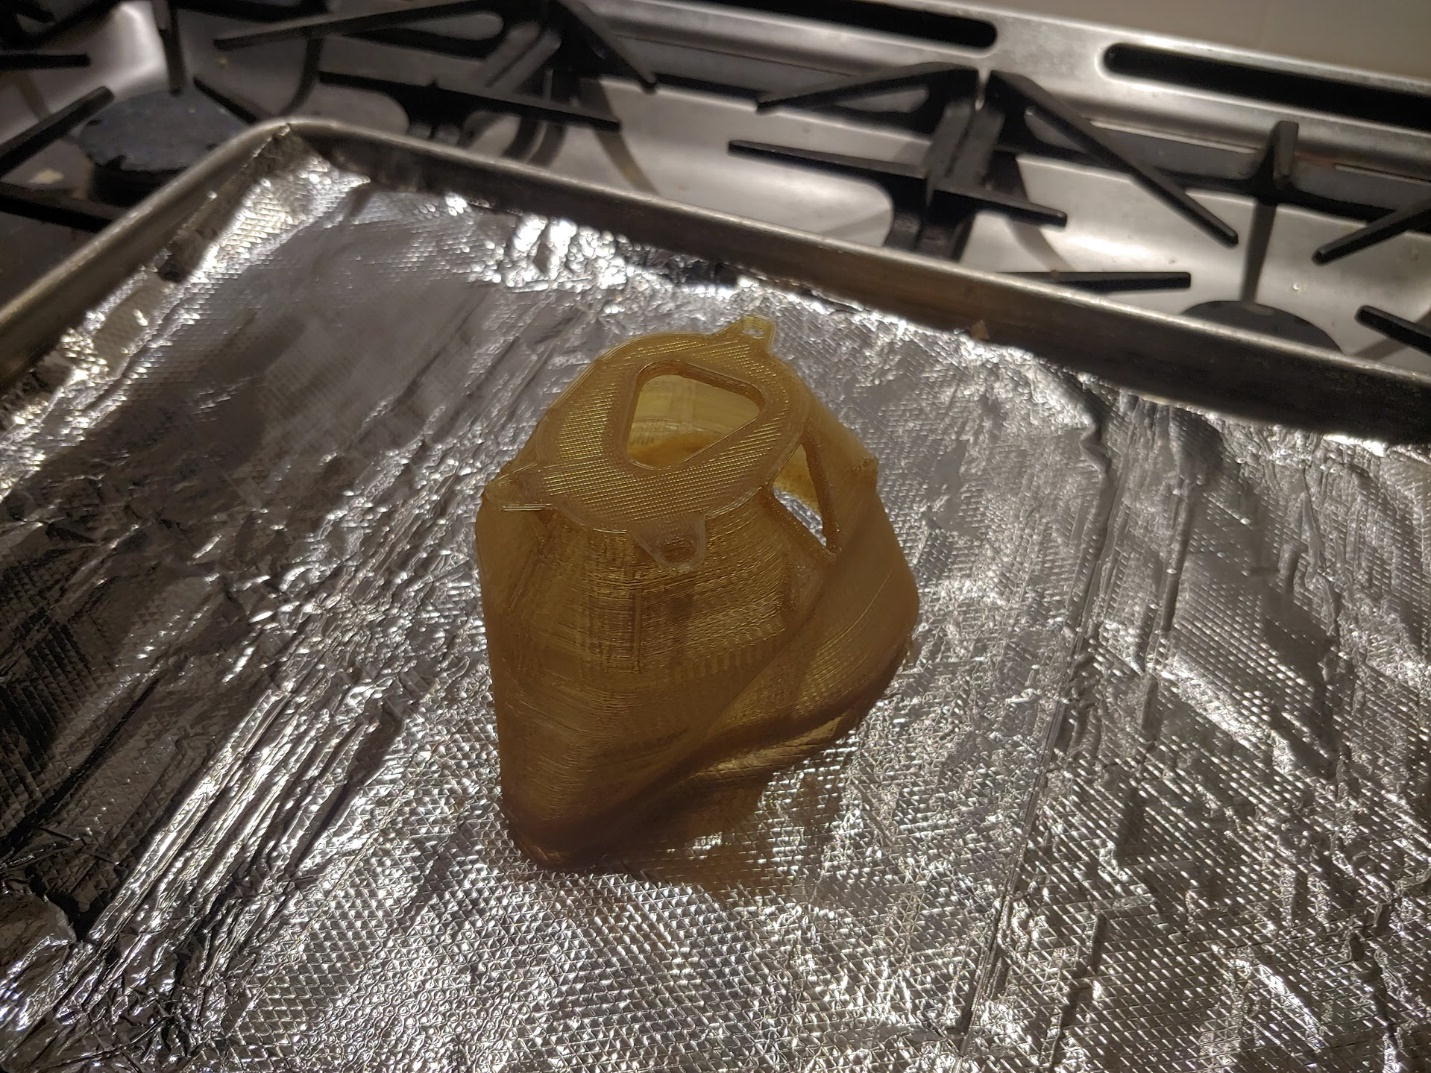 The 3D printed PEKK mask after oven sterilization. Photo via Joshua Pearce.